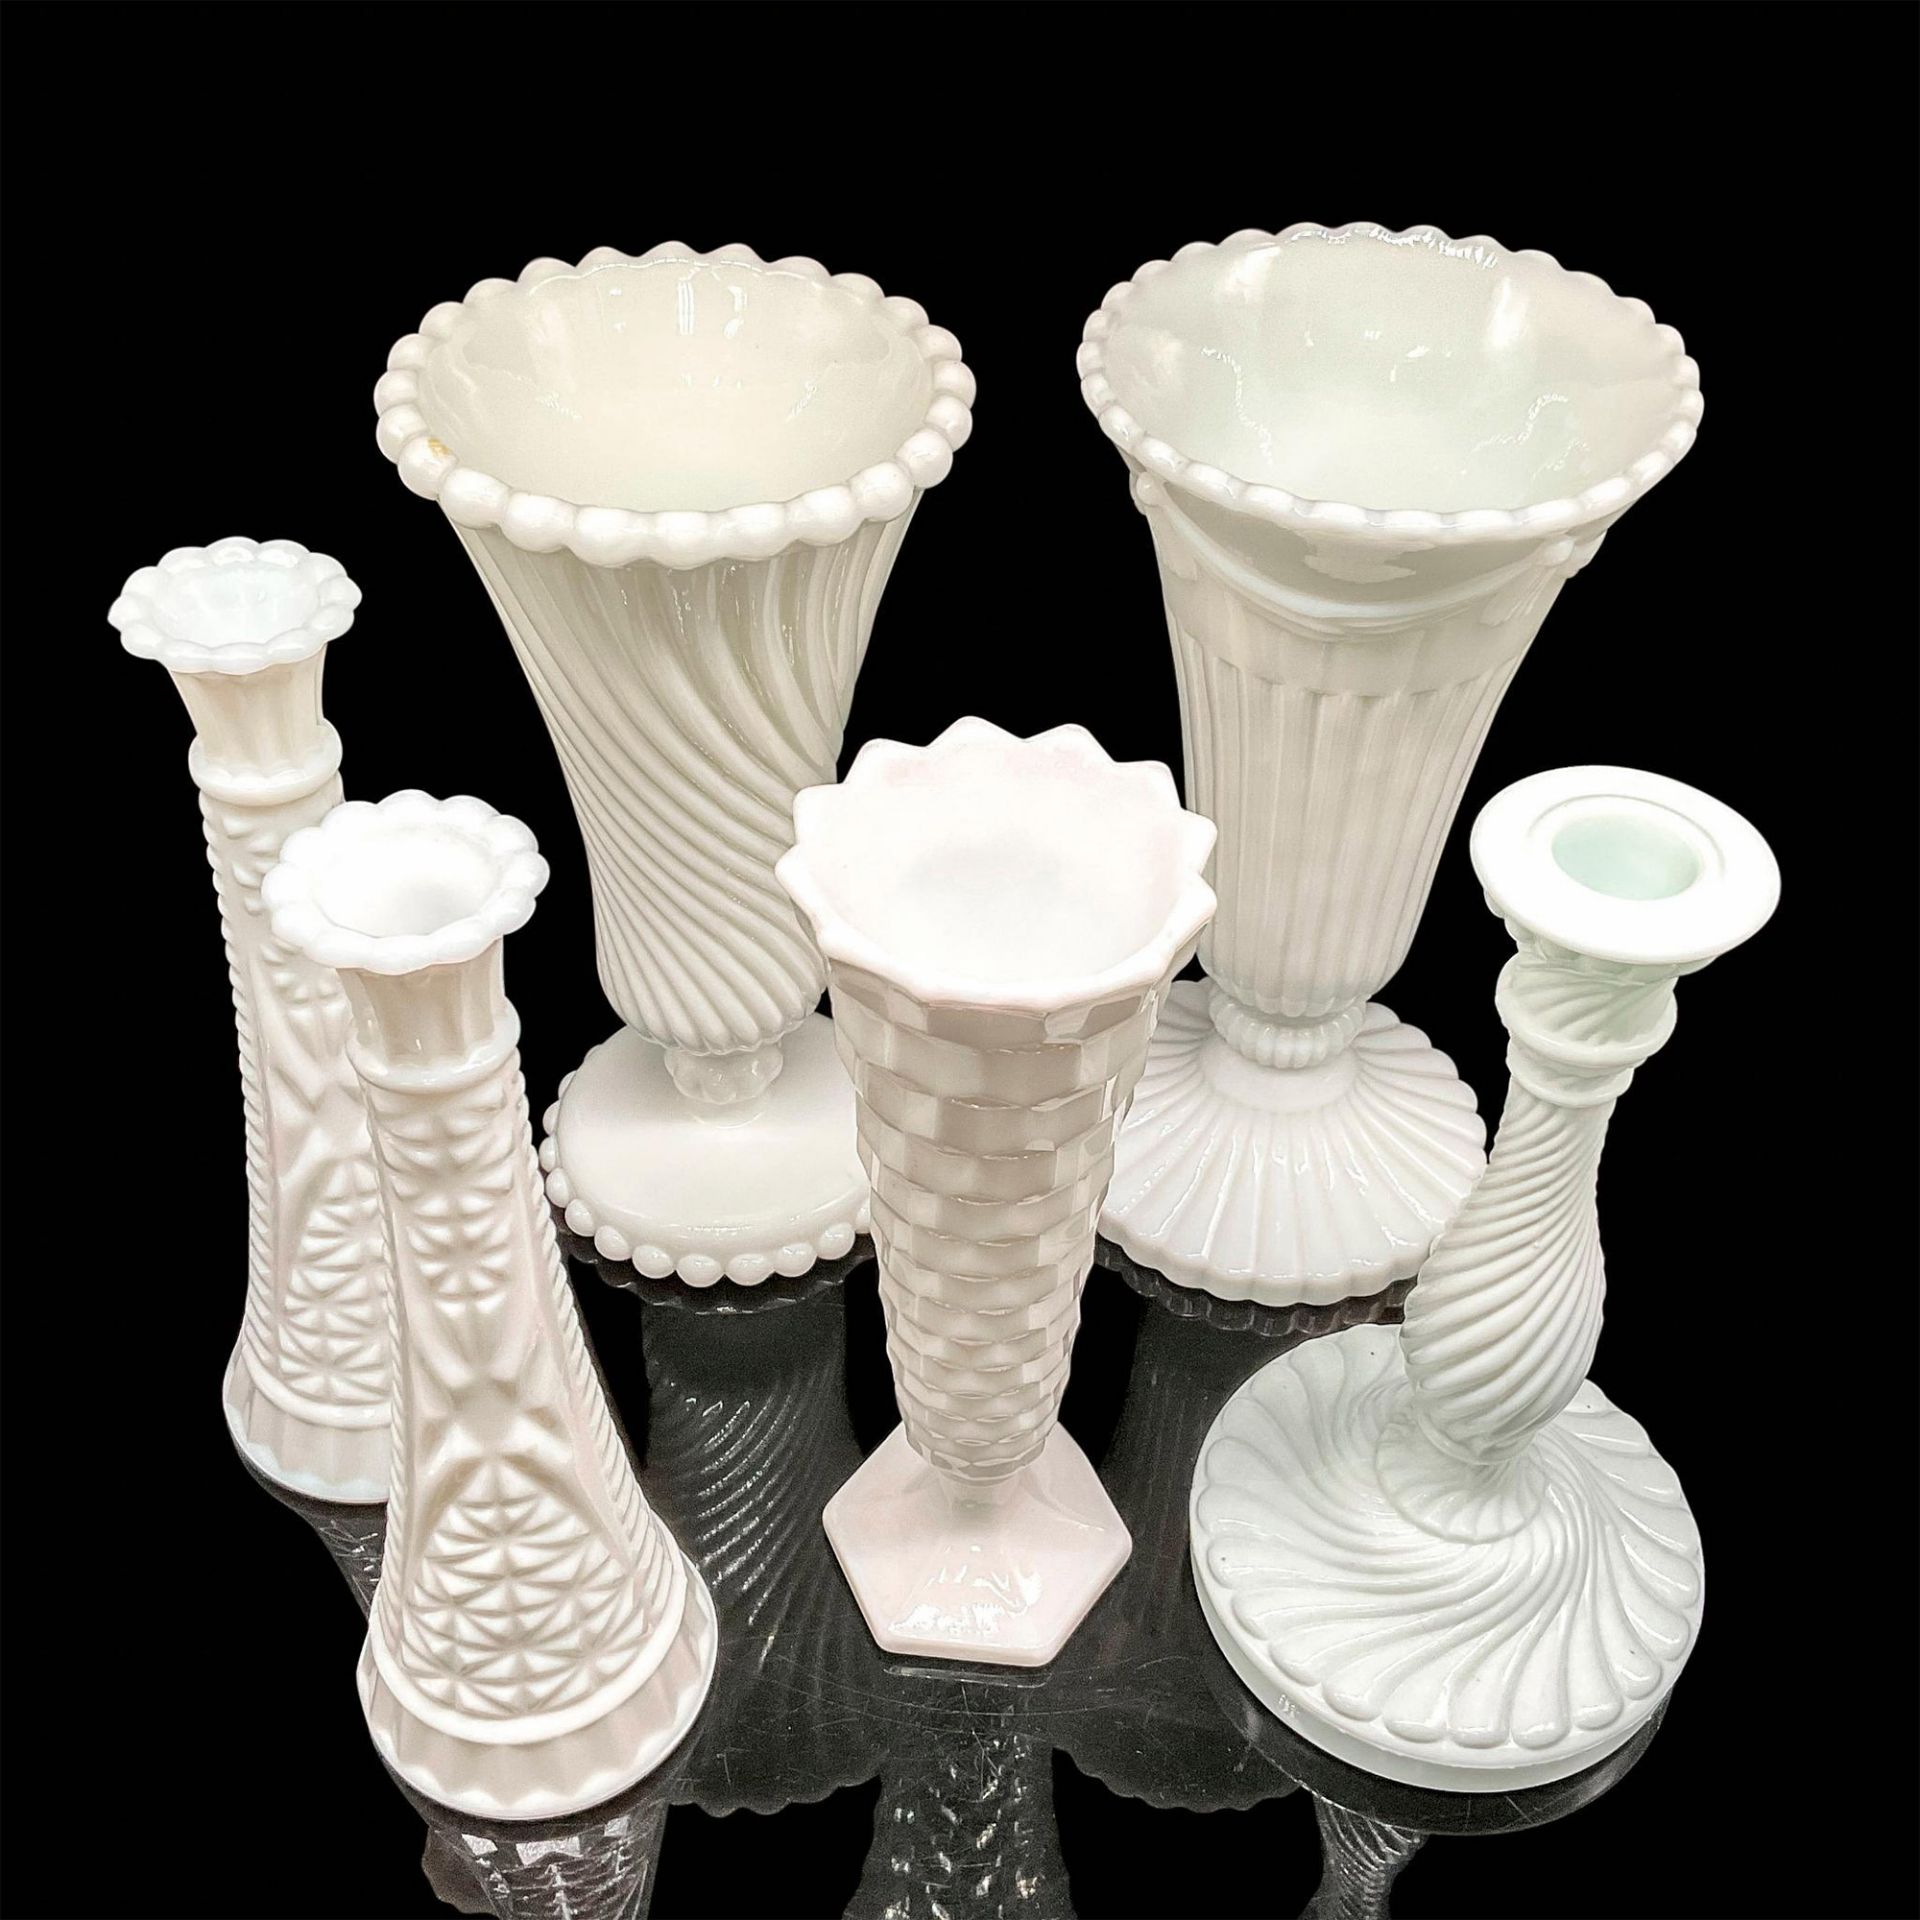 6pc Vintage Milk Glass Vases + Candle Holder - Image 2 of 2